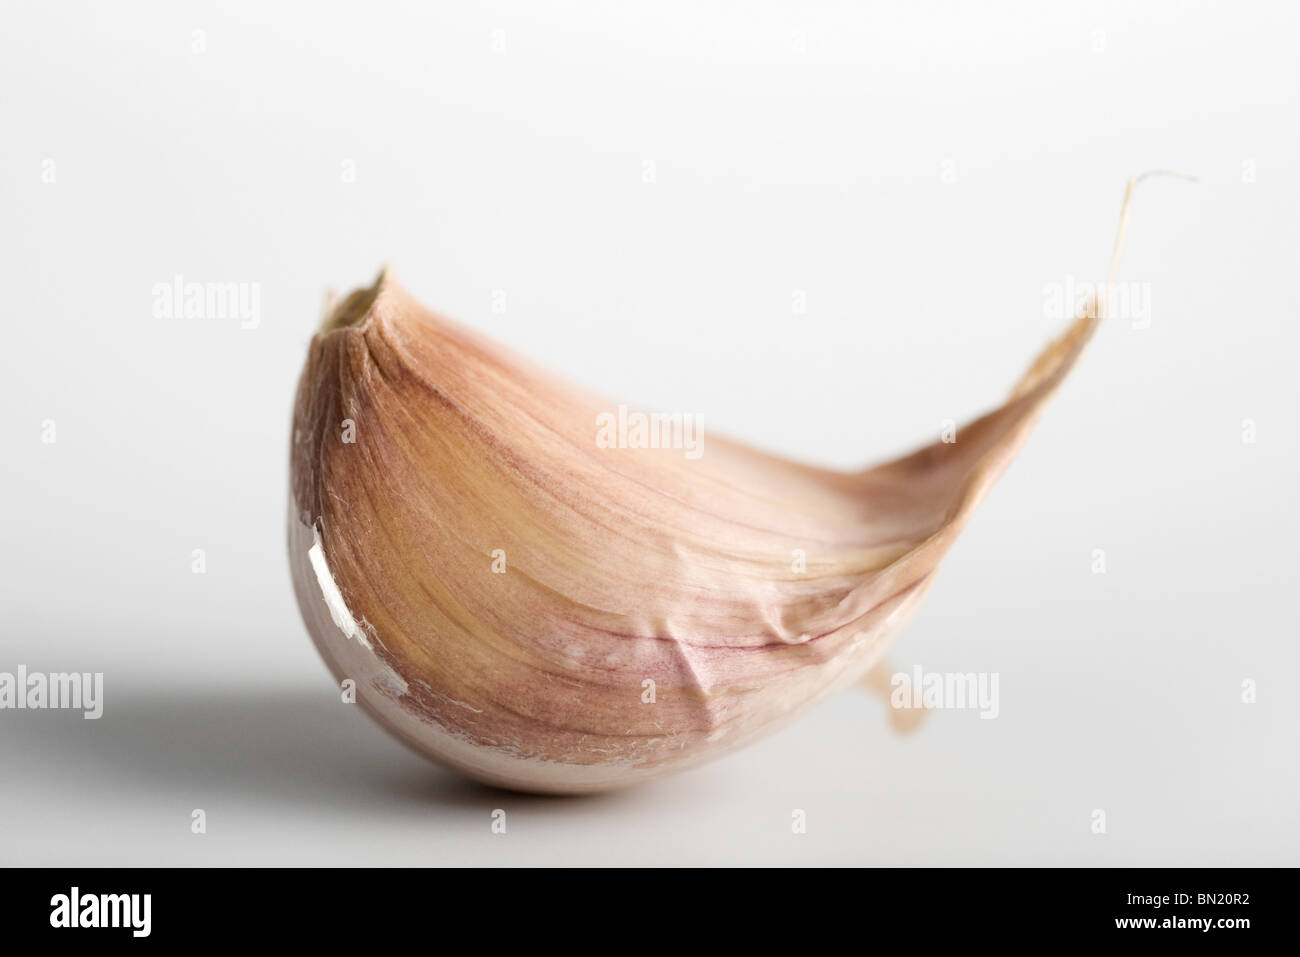 Clove of garlic Stock Photo